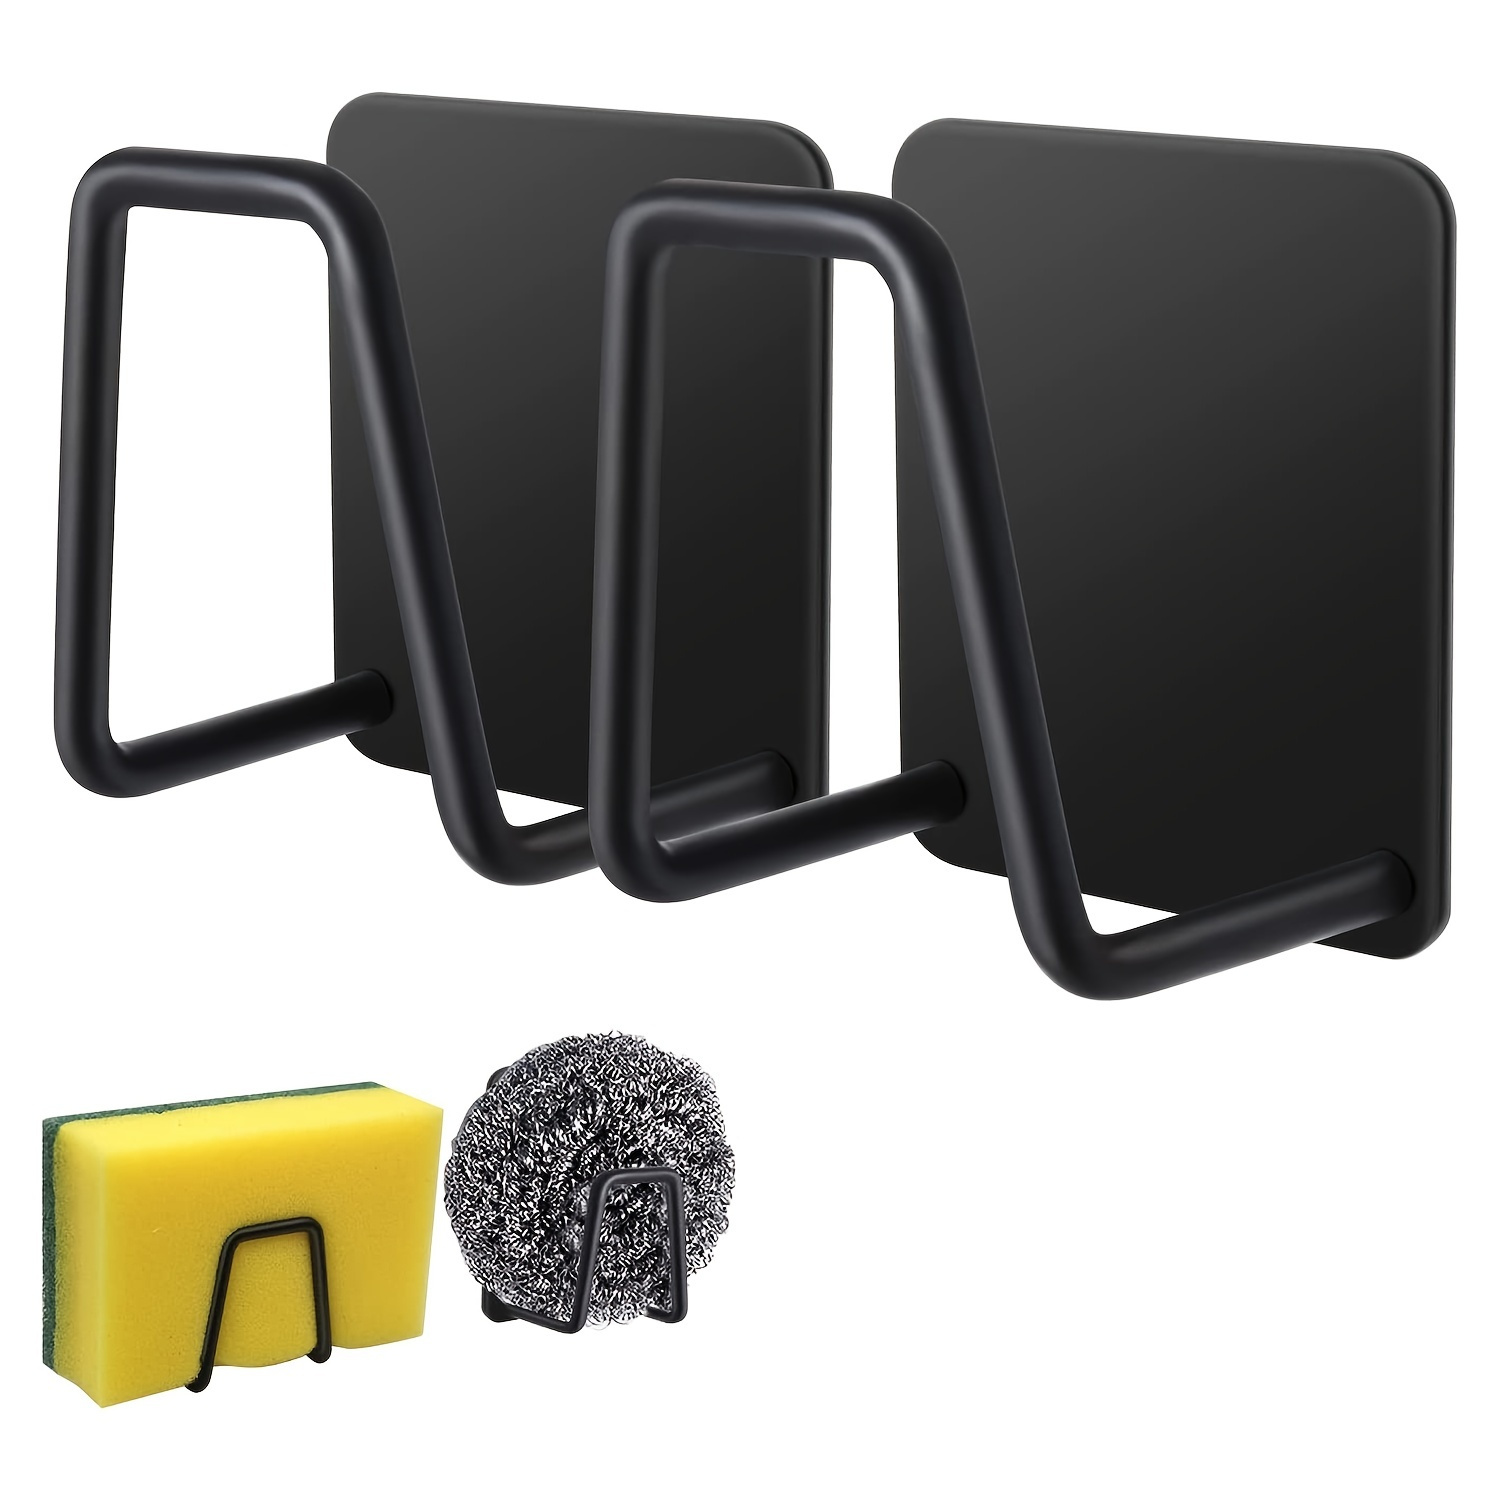 

2pcs Sponge Holders For Kitchen Sink, Black 304 Multifunctional Stainless Steel Holder For Kitchen Utensil, Kitchen Accessories